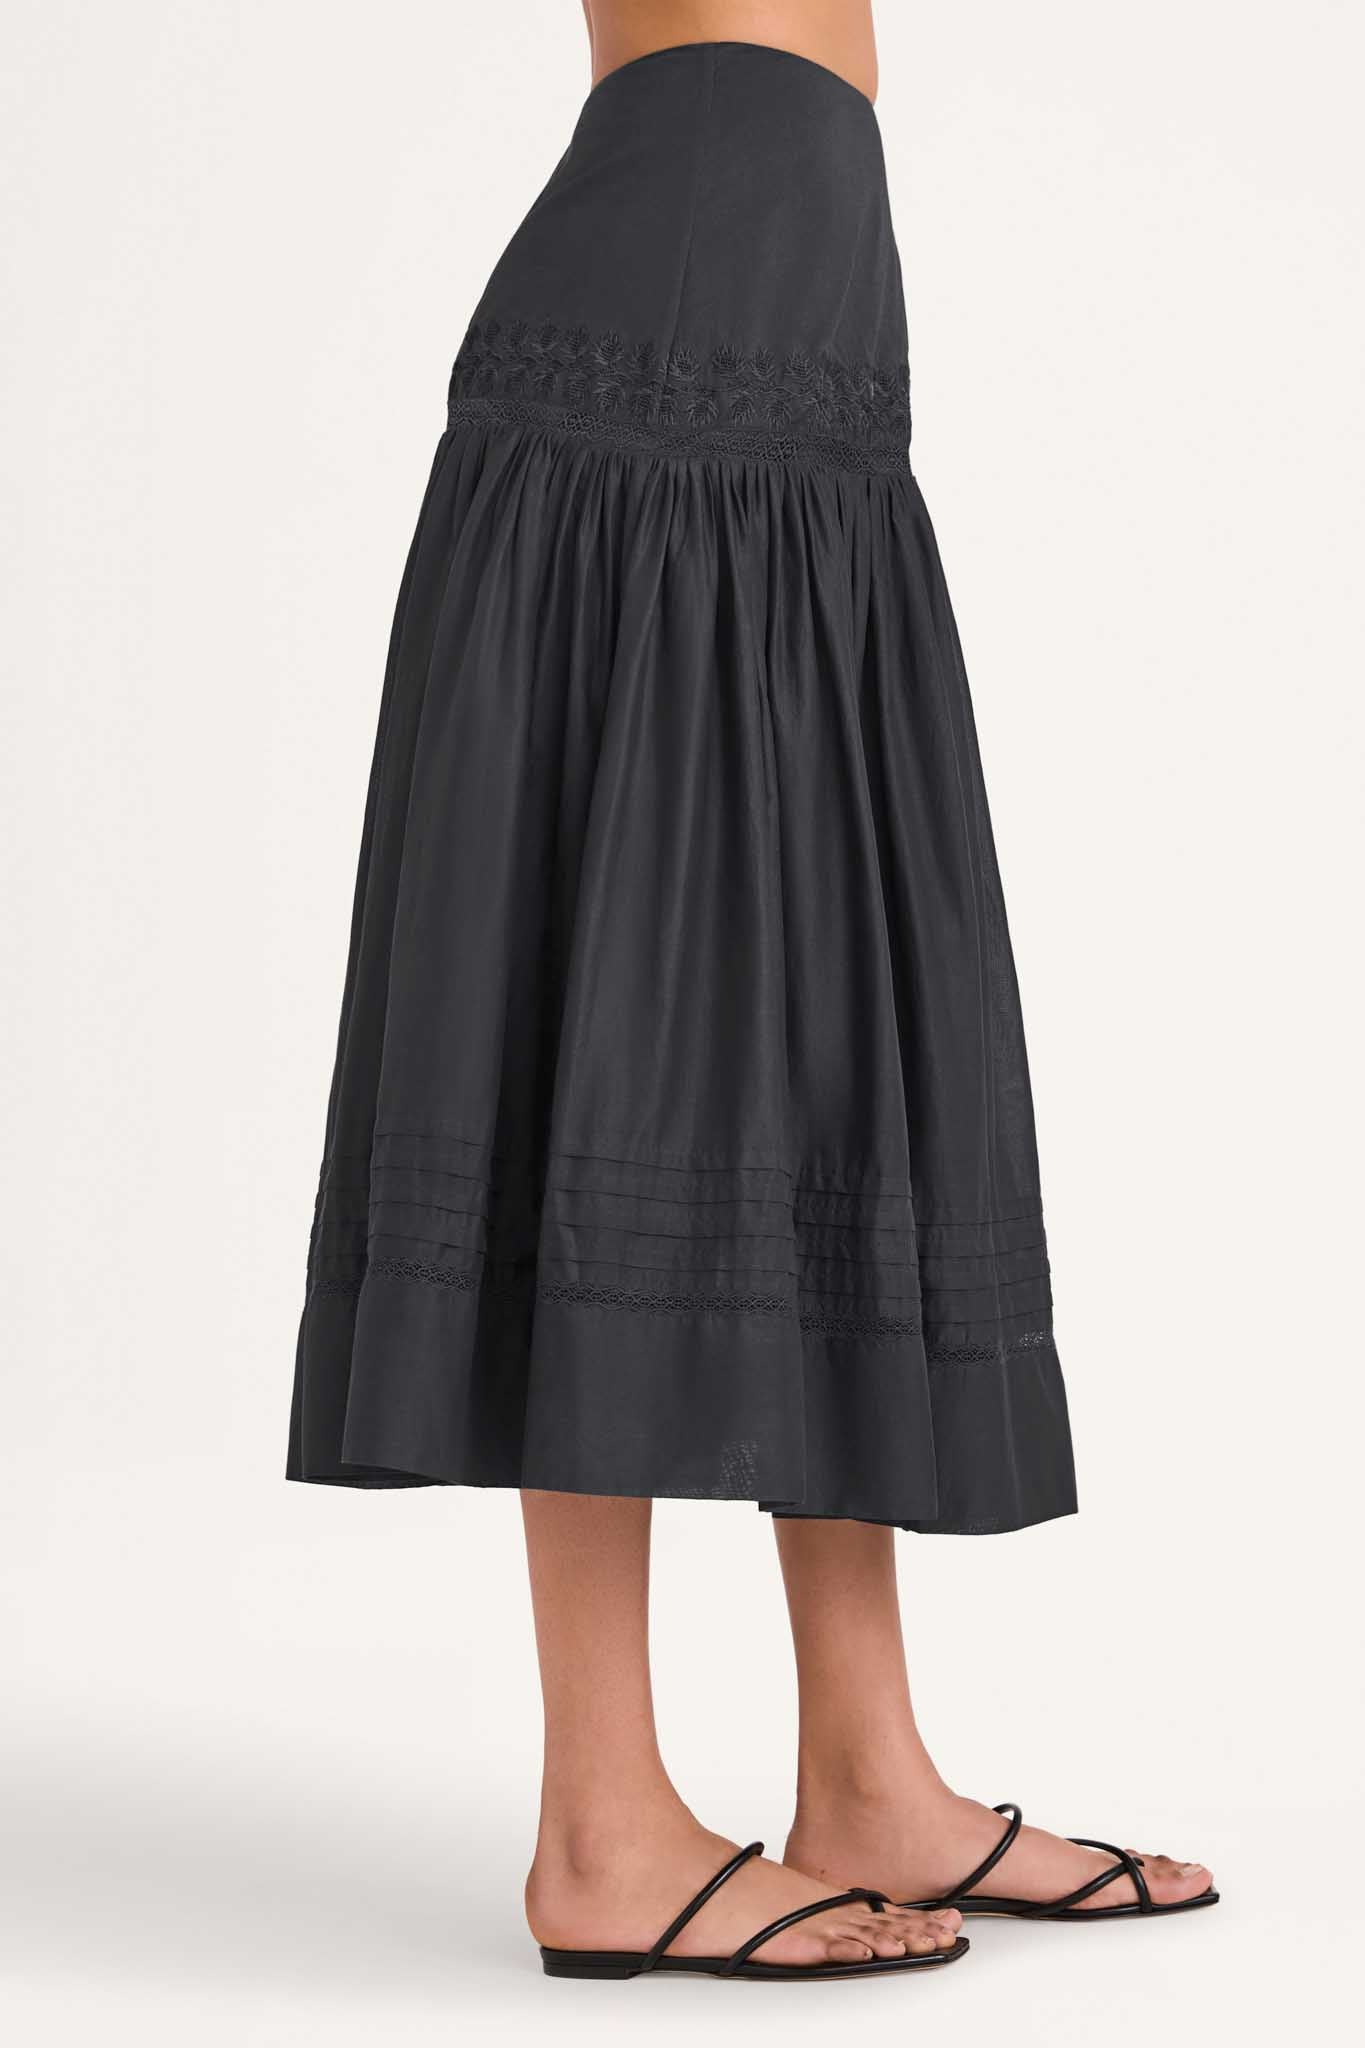 Aubrac Skirt in Graphite